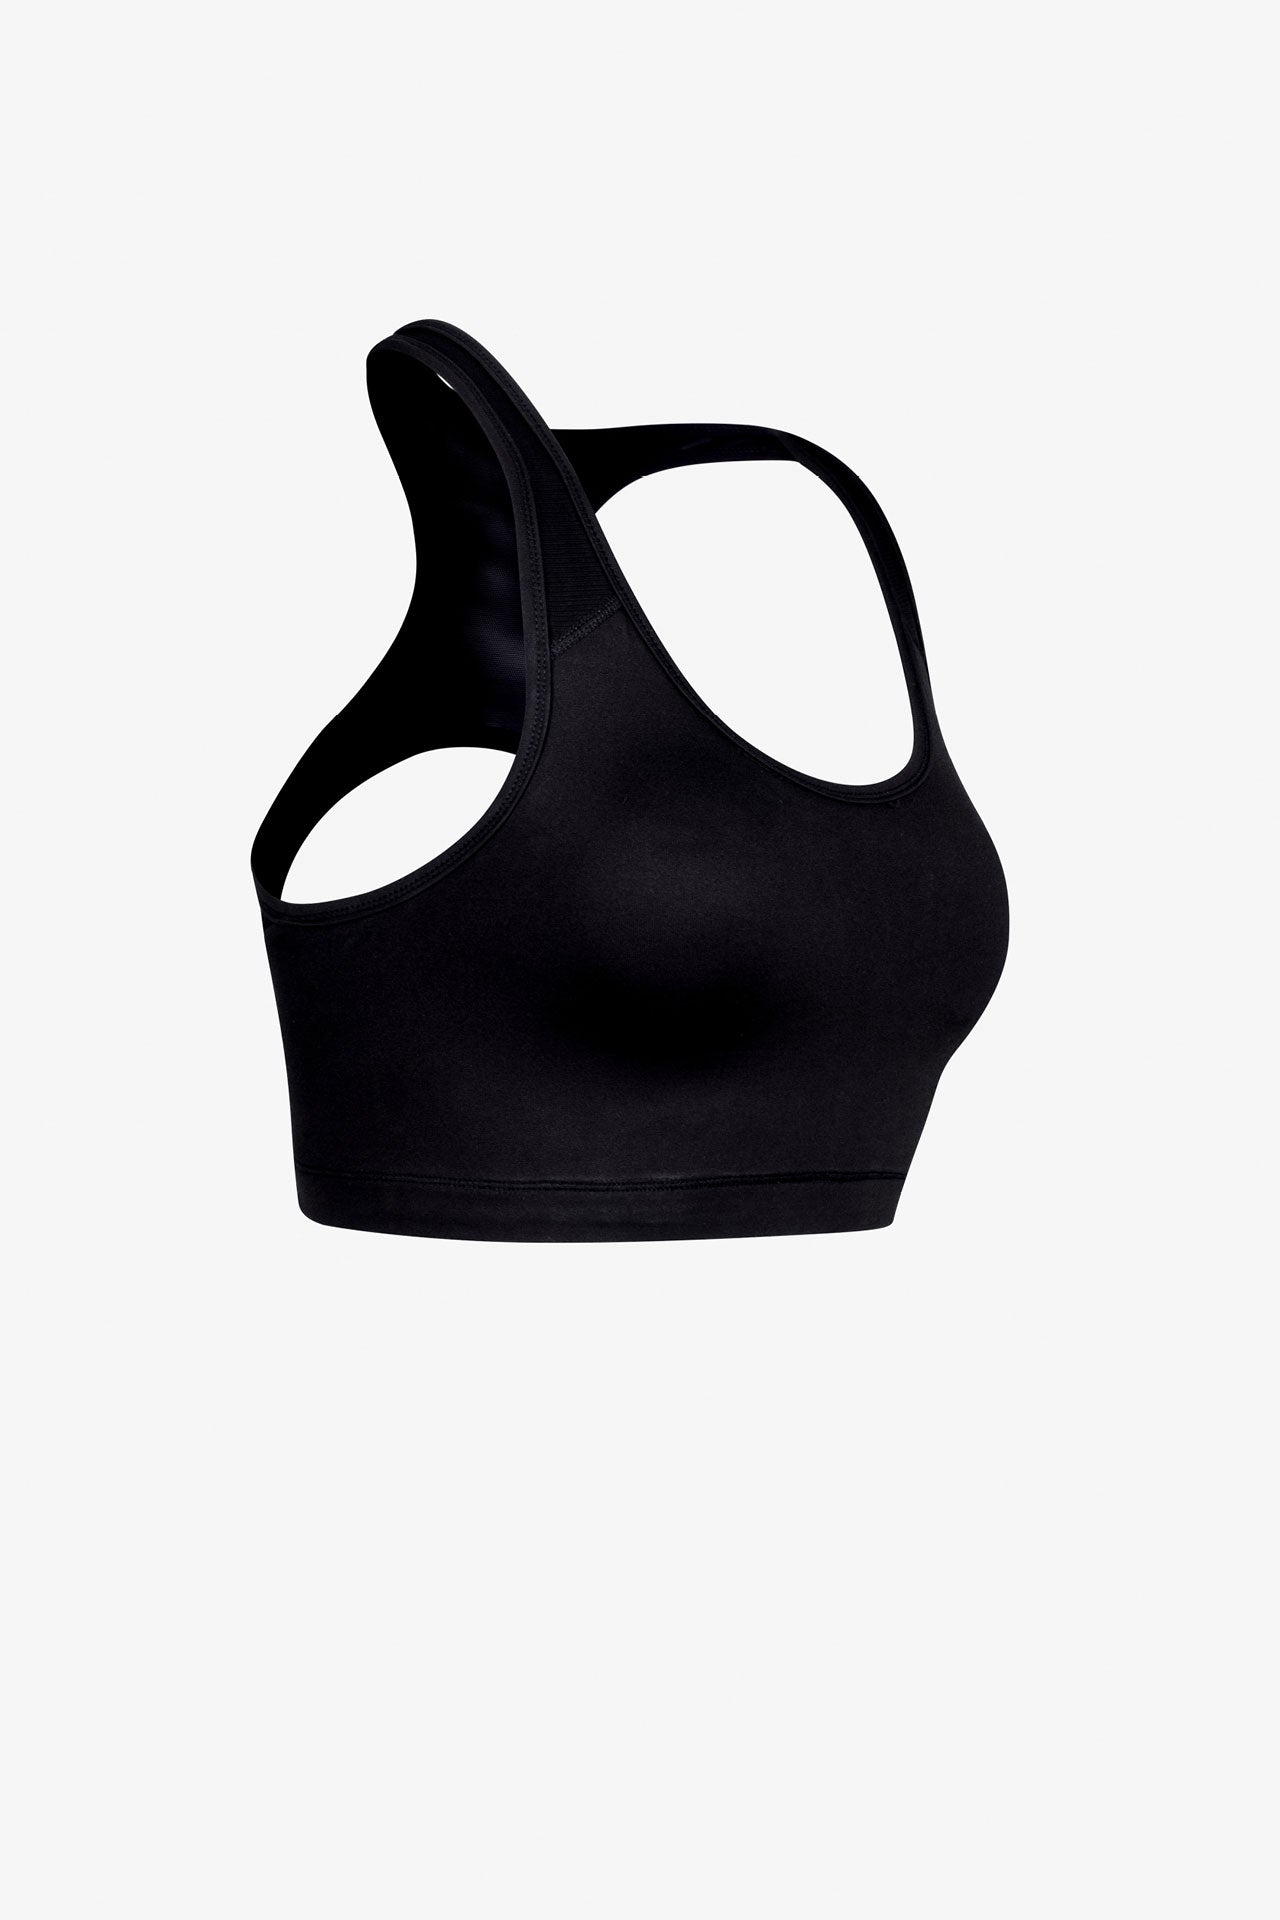 NWT DSG Women's Medium Support Crossback Sports Bra Black Size XS $25 P126